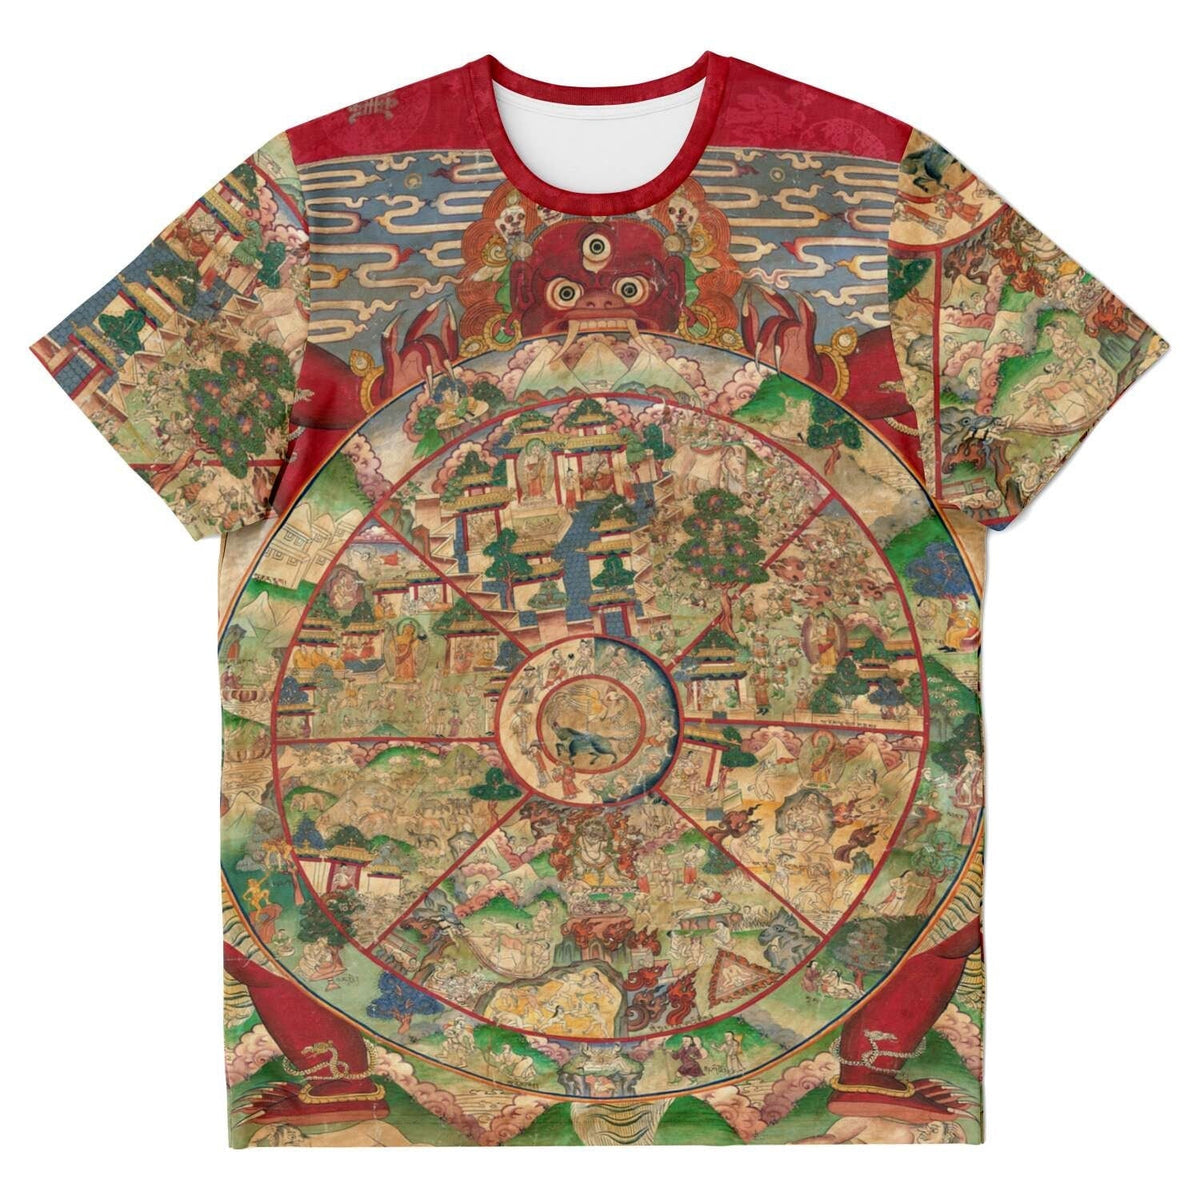 T-shirt Bhavacakra Mandala (The Wheel of Life Thangka) Buddhist Vintage Vajrayana Tibetan T-Shirt